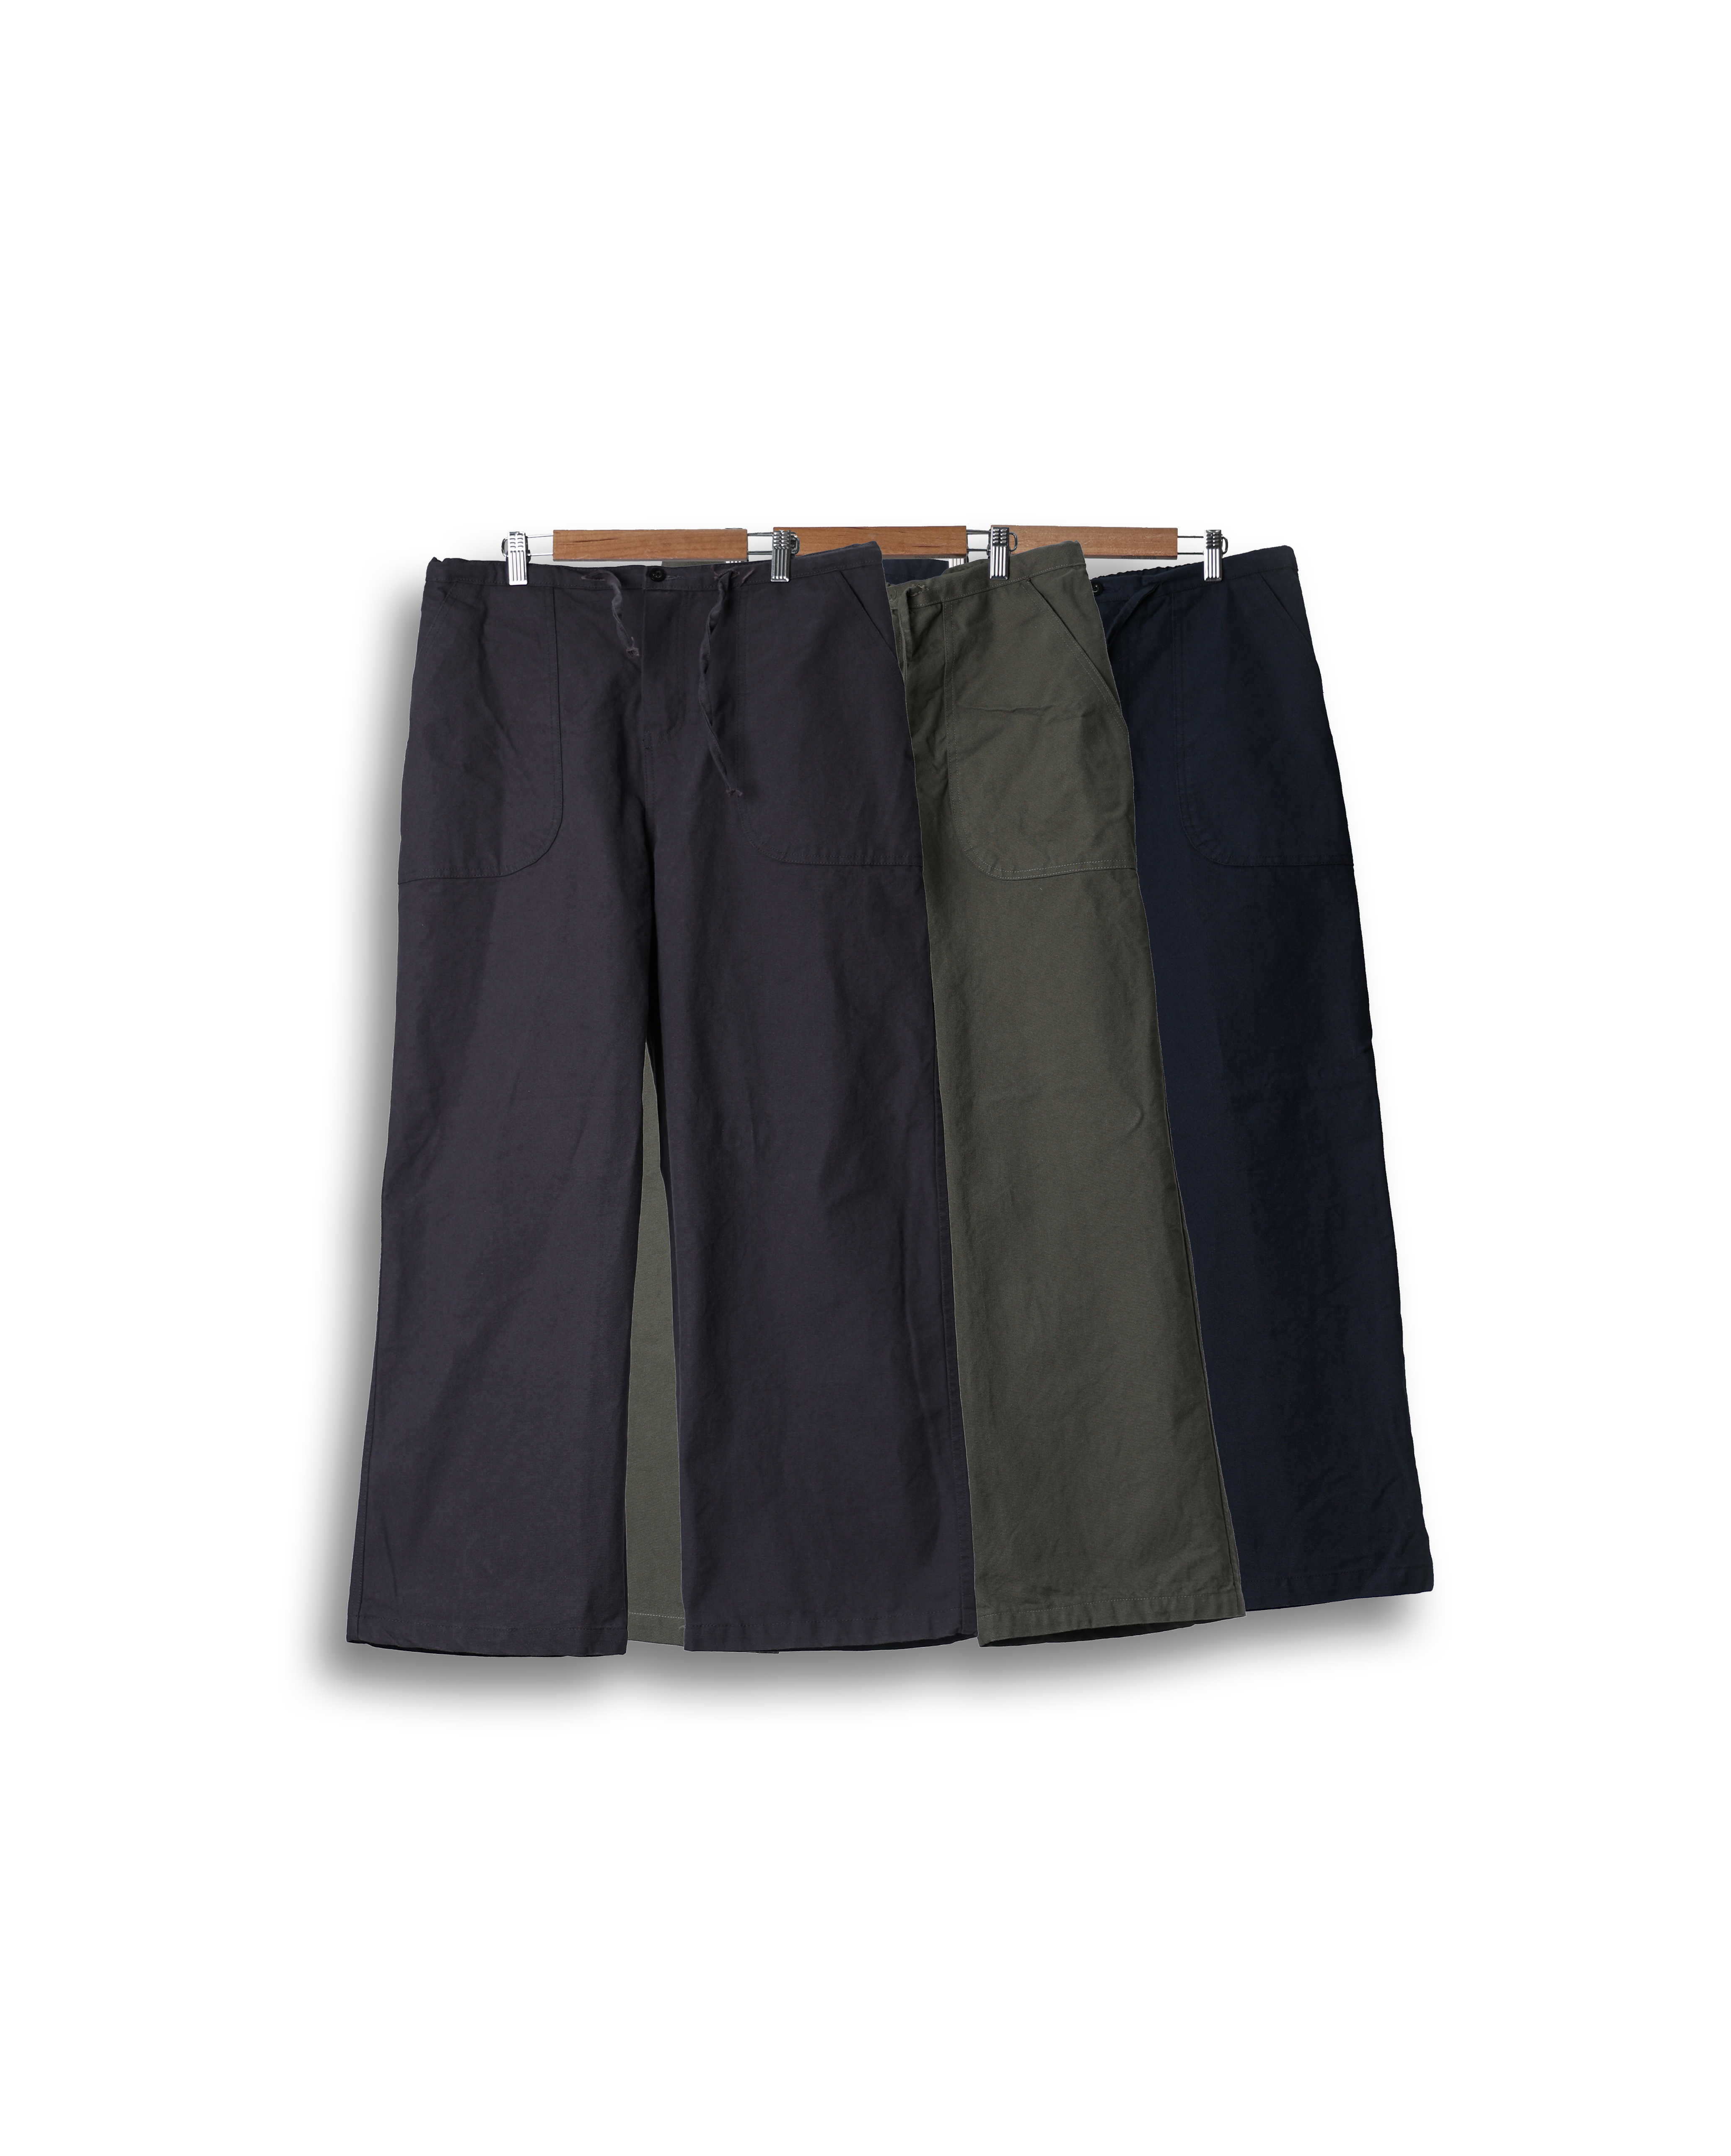 TWELEVE Easy Fatigue Wide Strap Pants (Charcoal/Navy/Khaki)